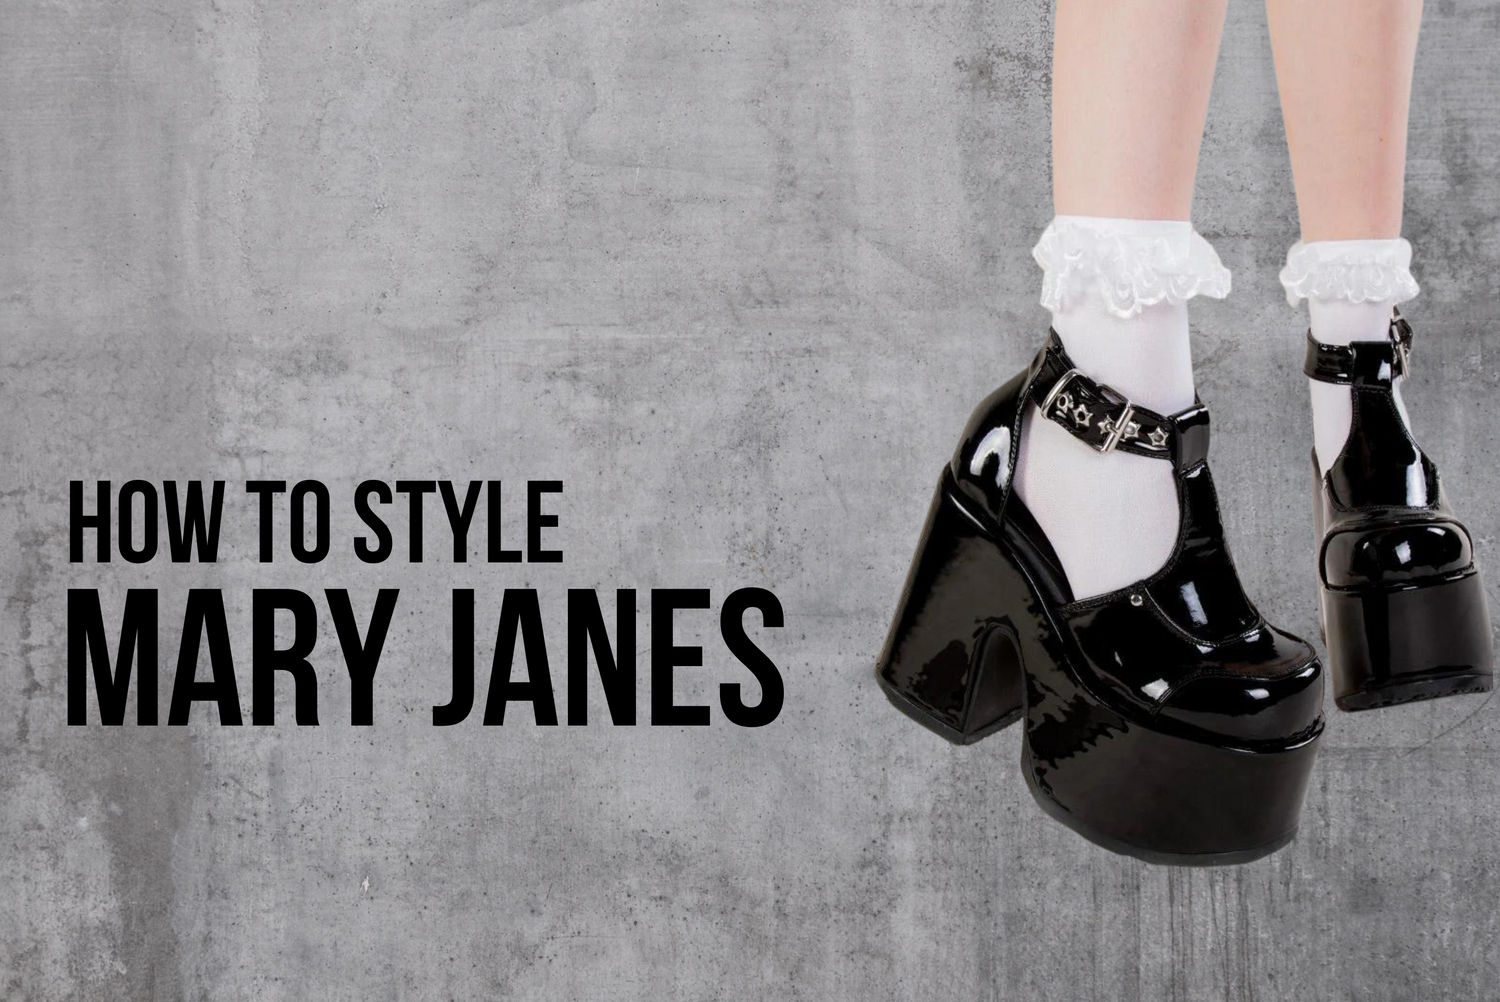 Hail Mary: How To Style Mary Janes